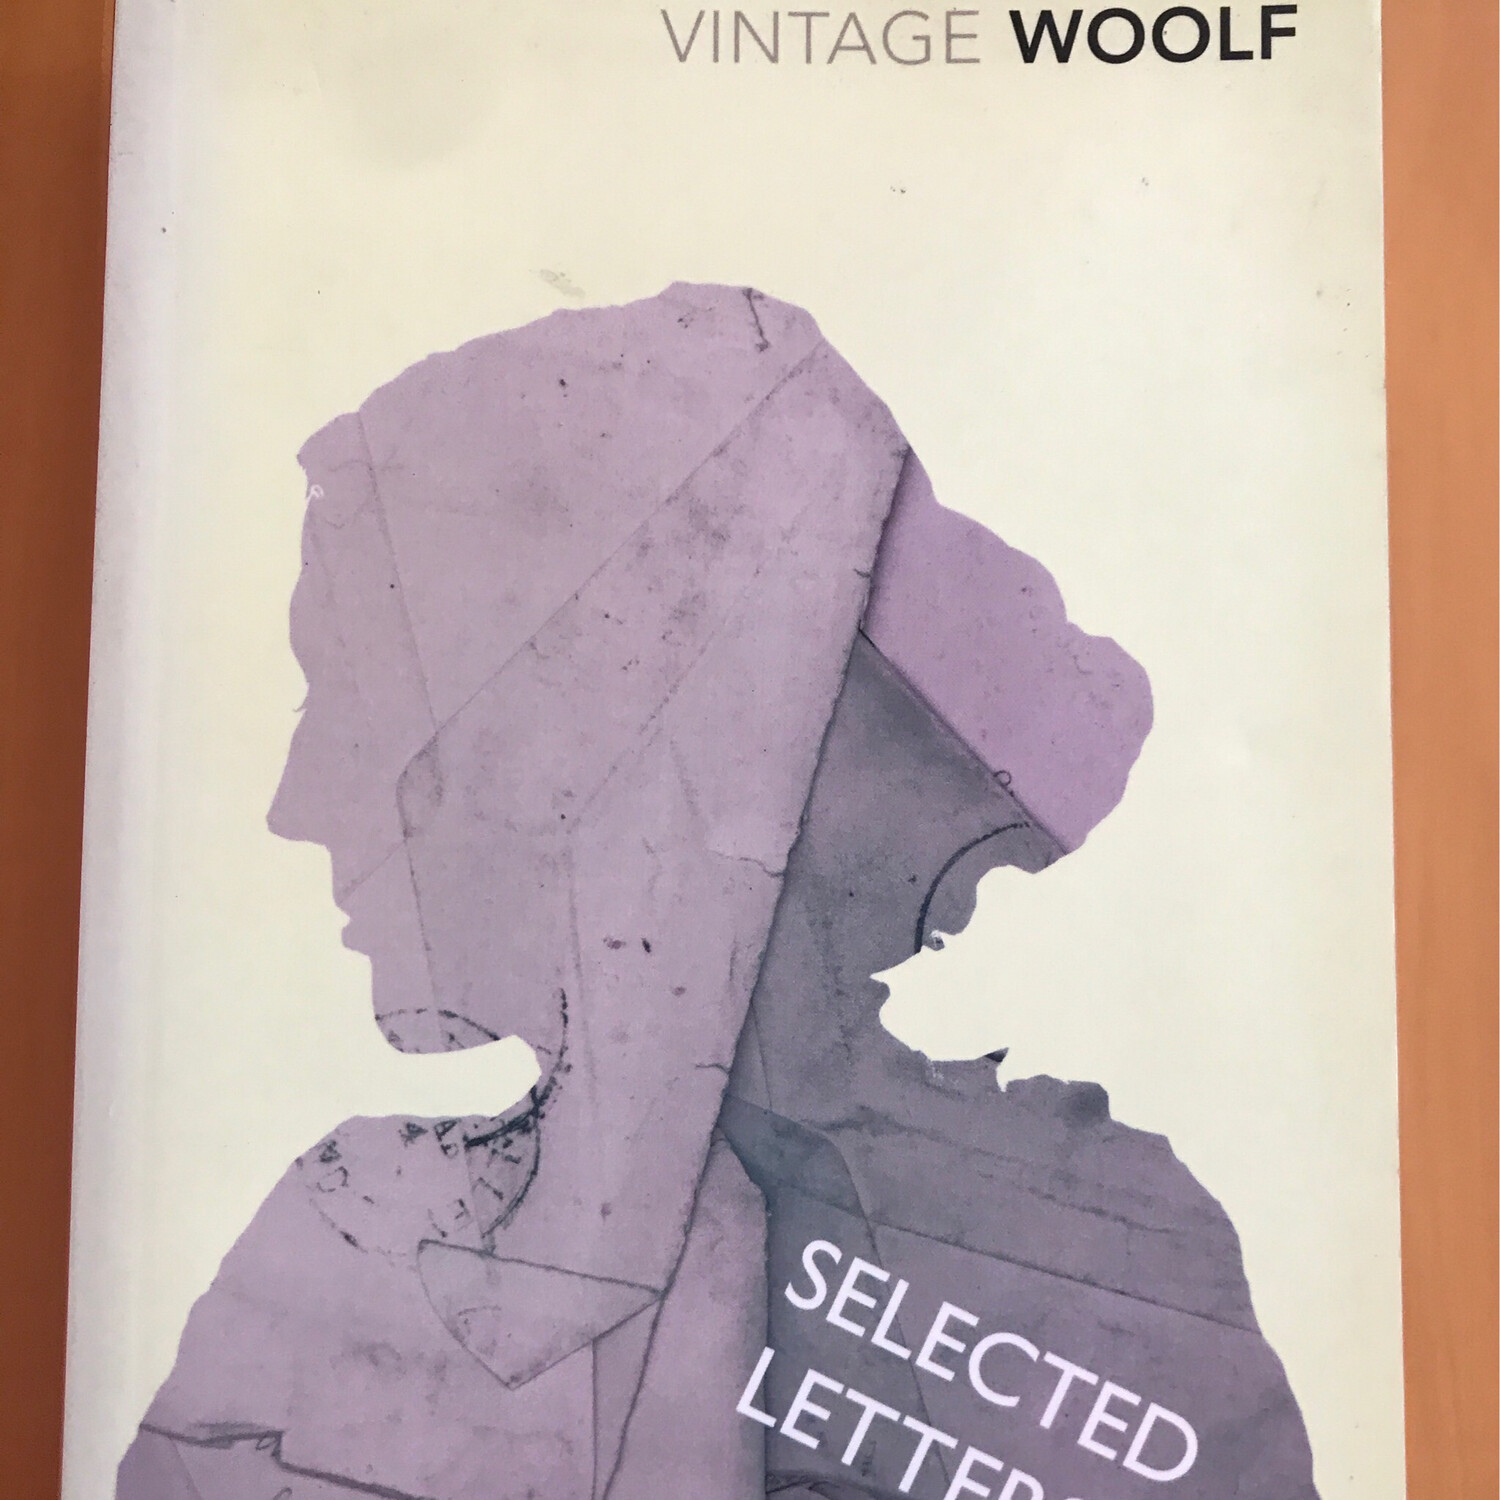 Vintage Woolf Selected Letters